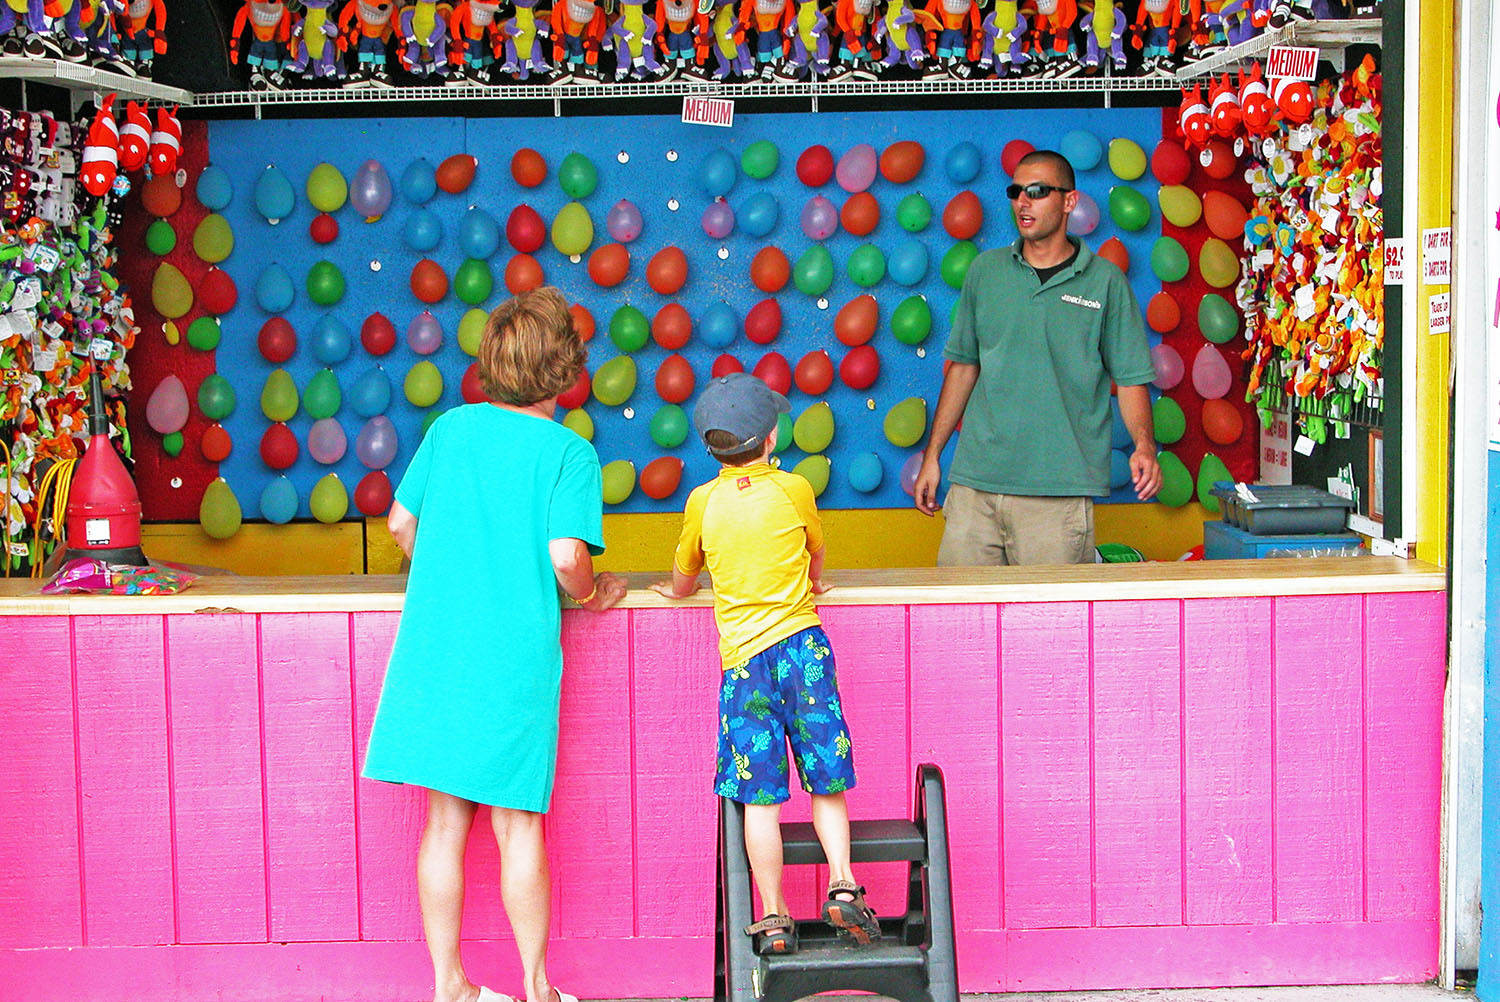 Carnival_Arcade_Balloon_Darts_Throw_Prize_Summer_Fun.jpg